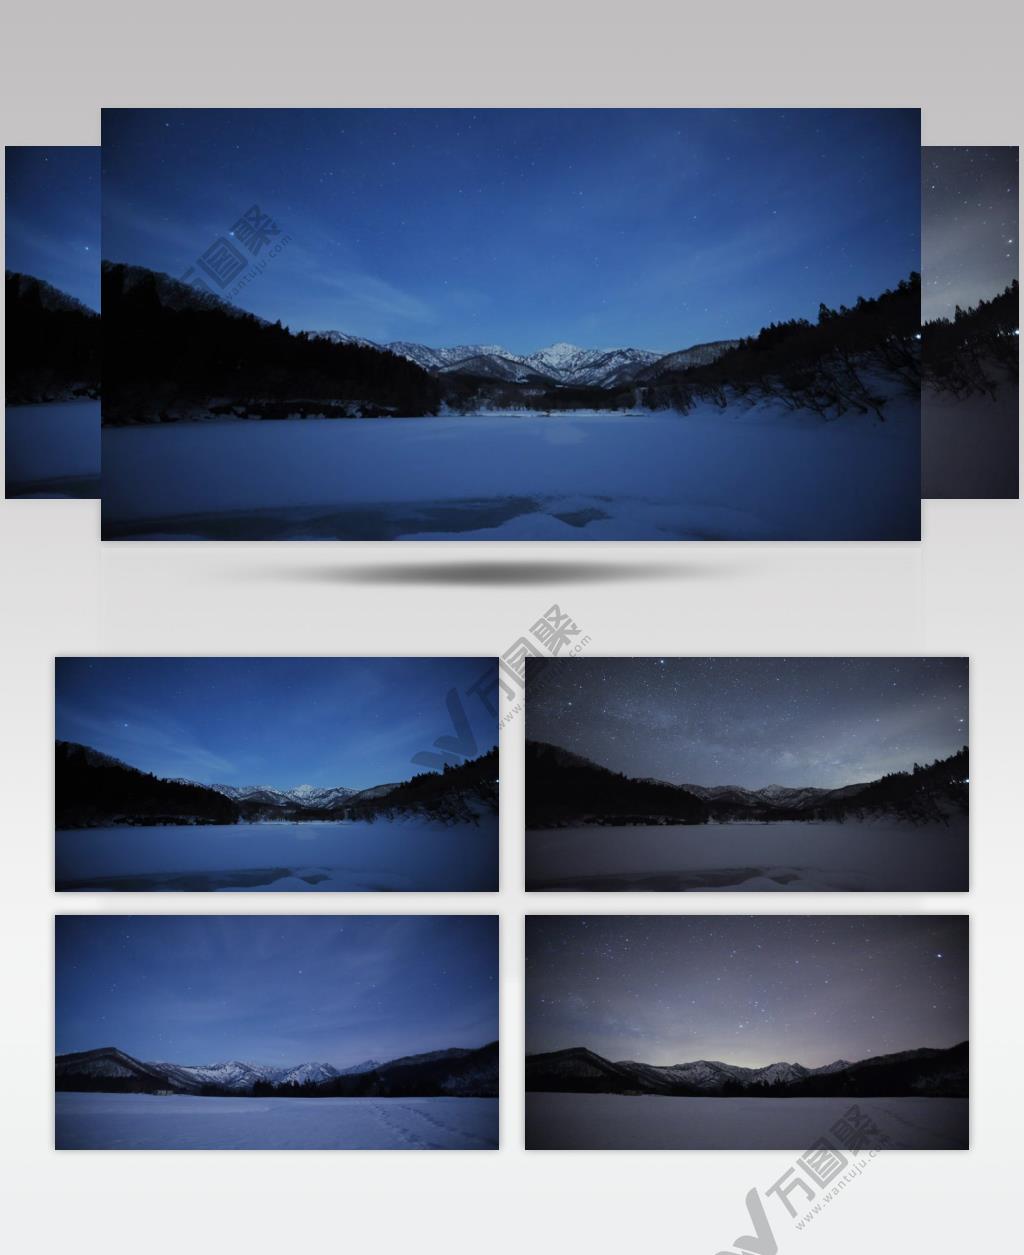 Moonlight_and_Milky_way_rising_at_Daigenta_Canyon延时摄影风光风景视频素材